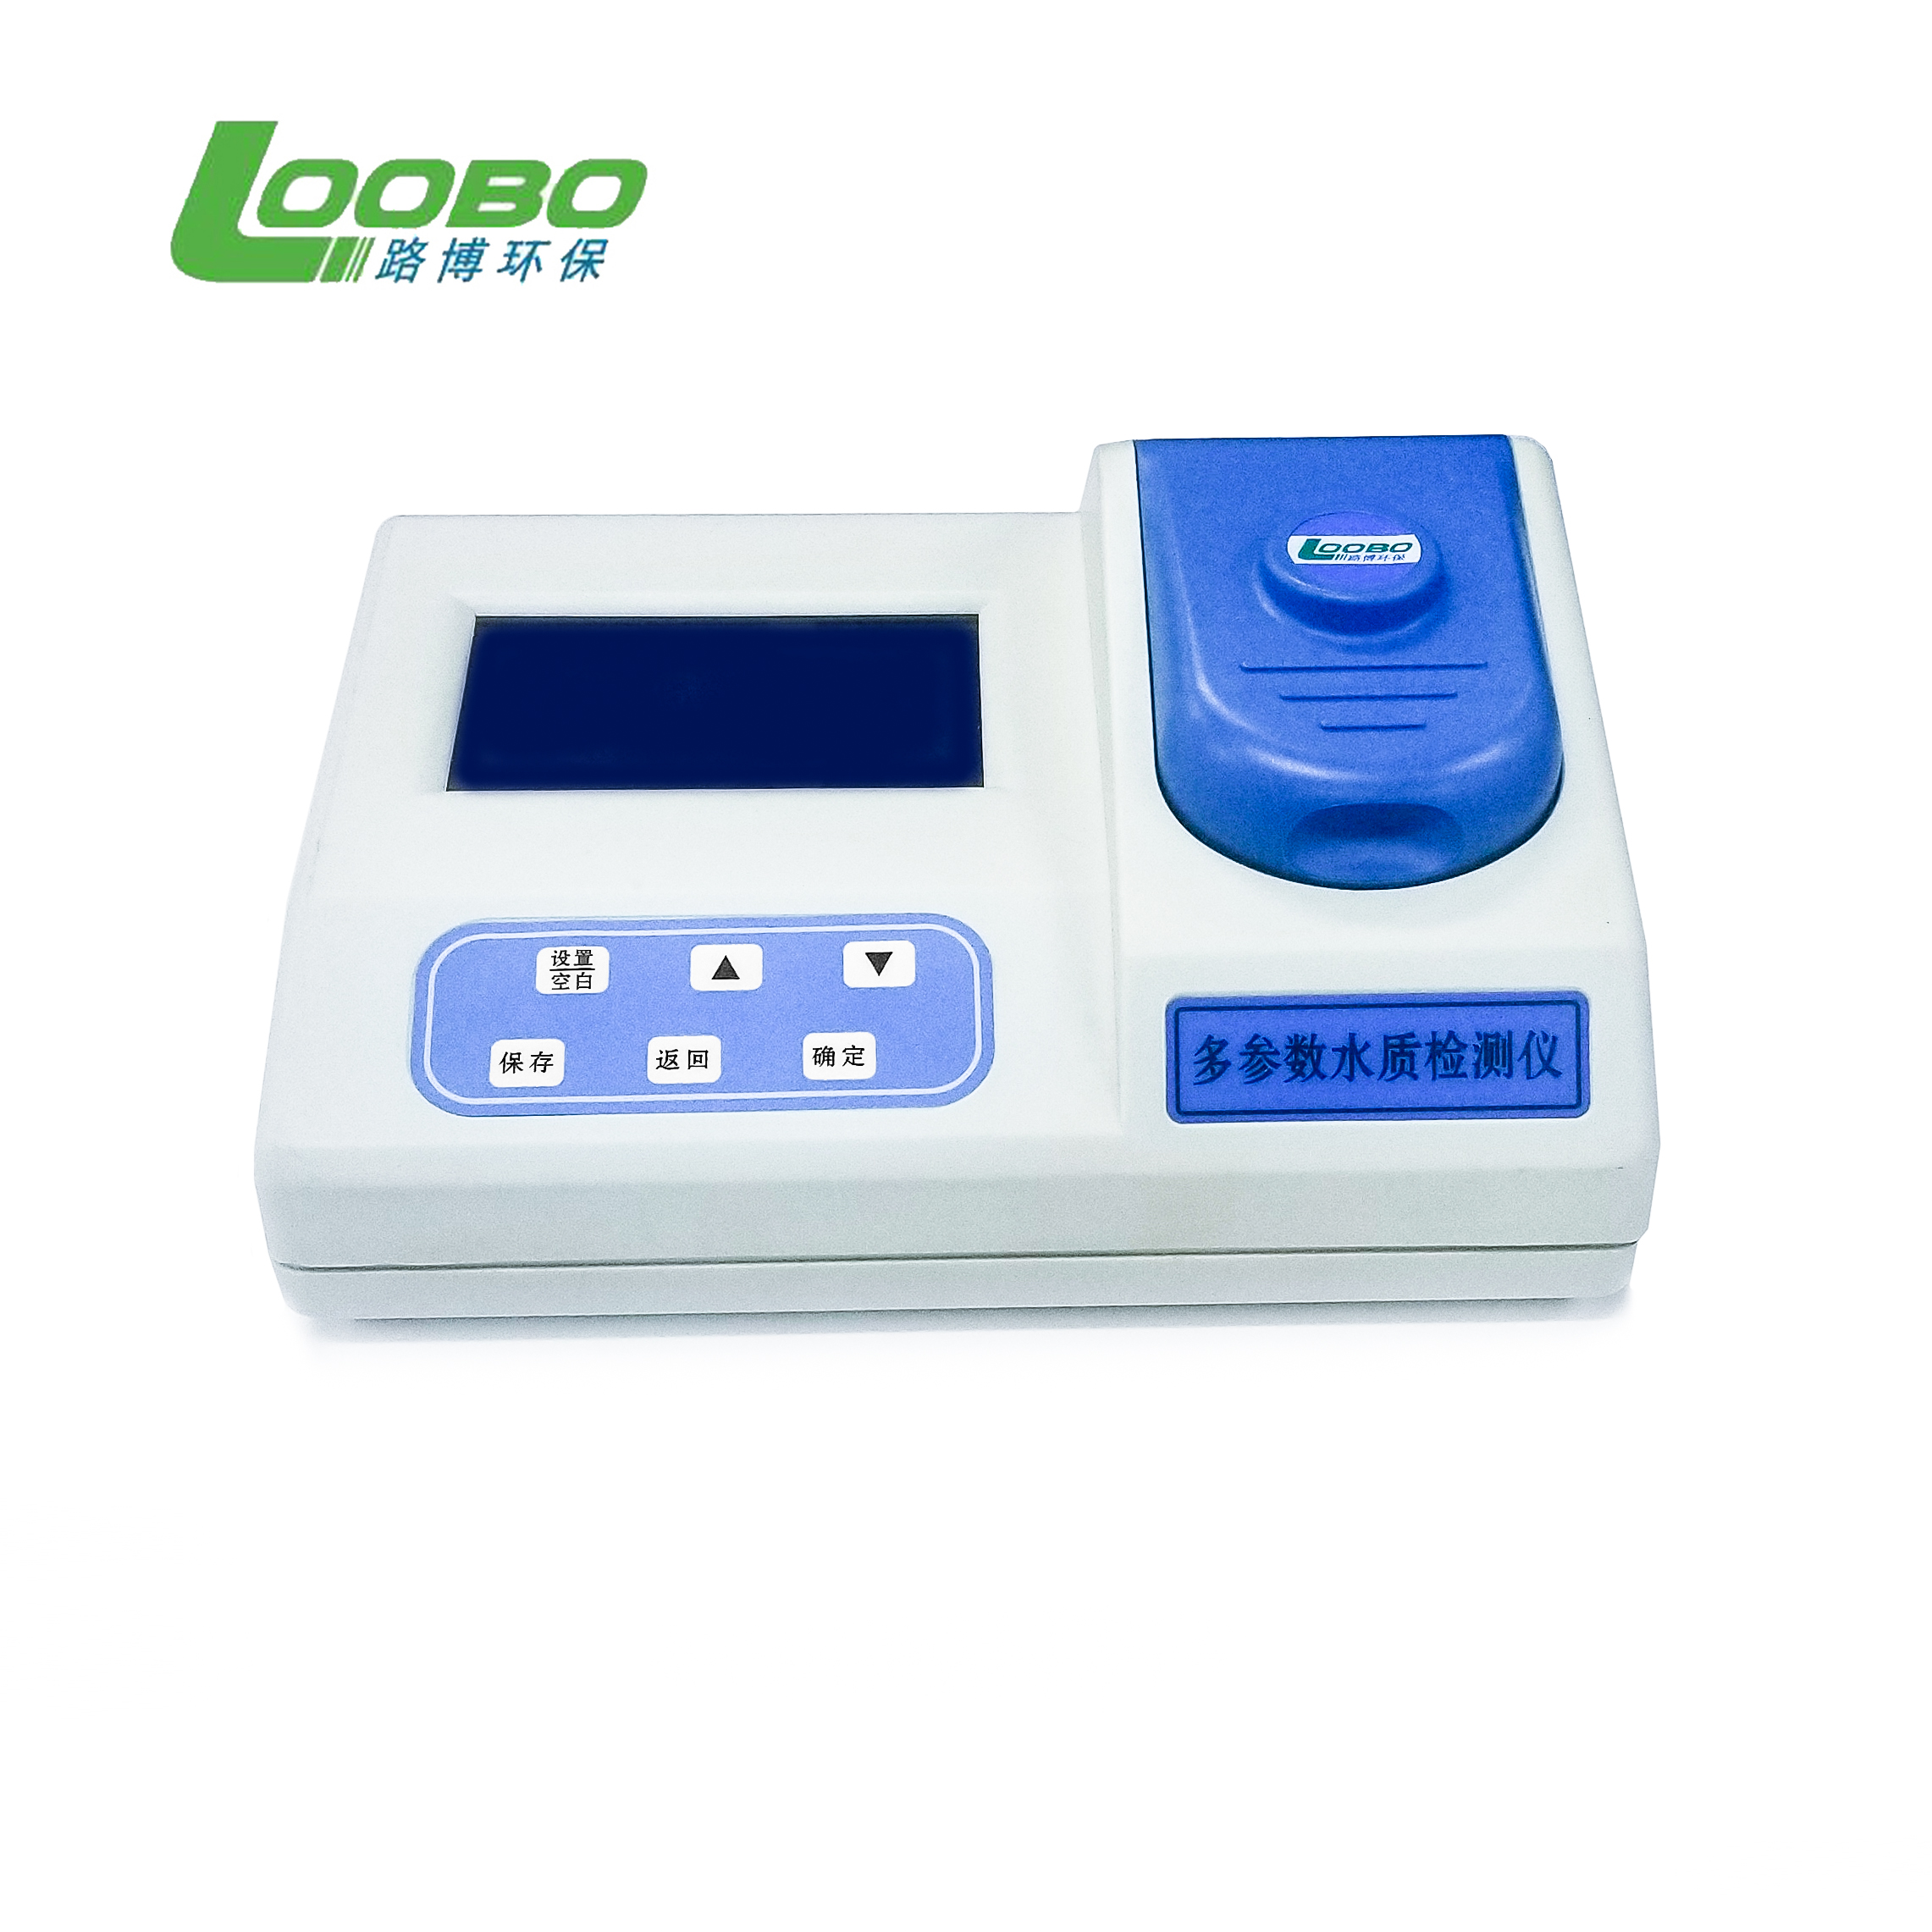 LB-CNP【COD/氨氮/总磷】 三合一型多参数水质检测仪